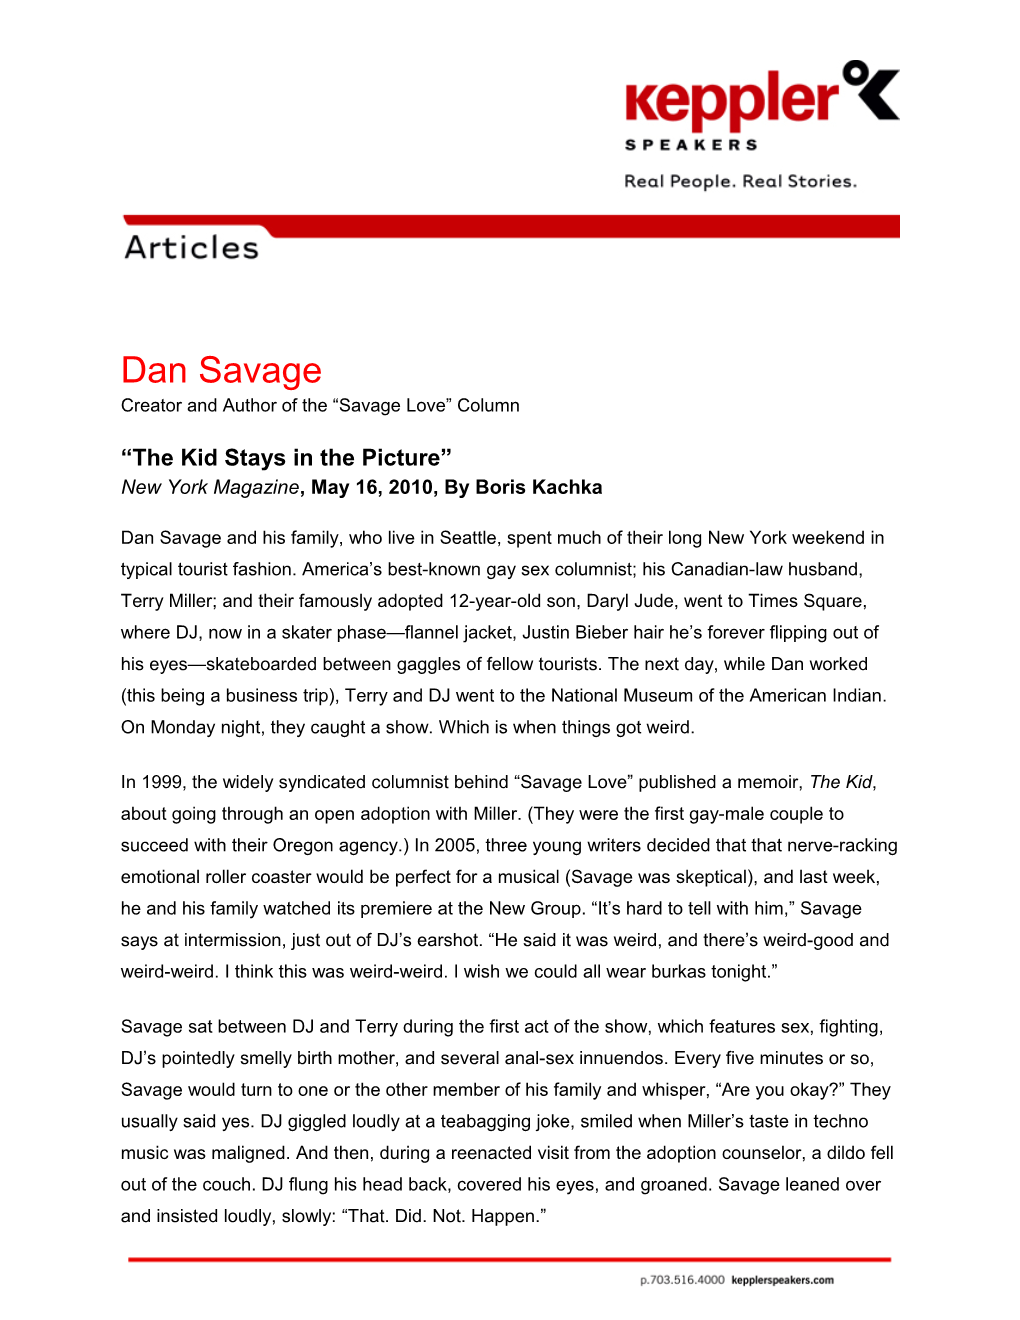 Dan Savage Creator and Author of the Savage Love Column